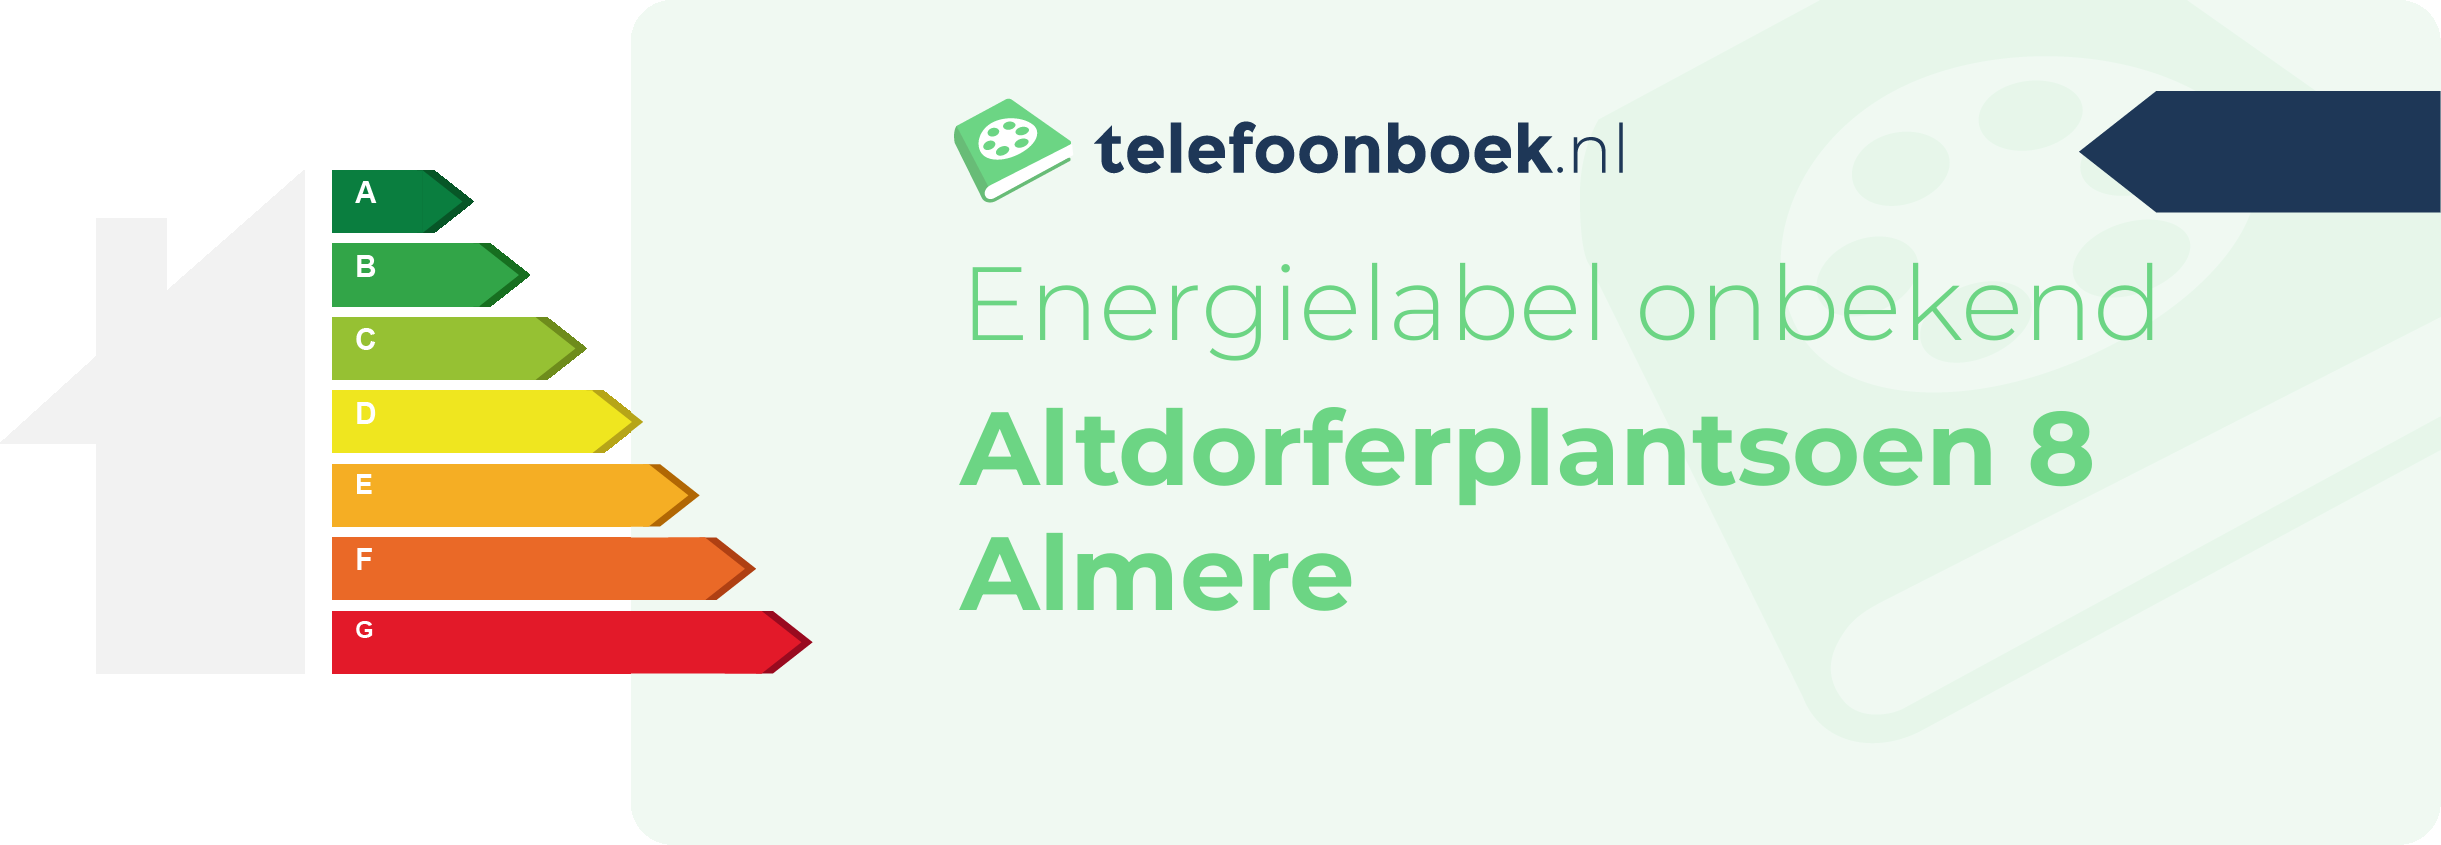 Energielabel Altdorferplantsoen 8 Almere